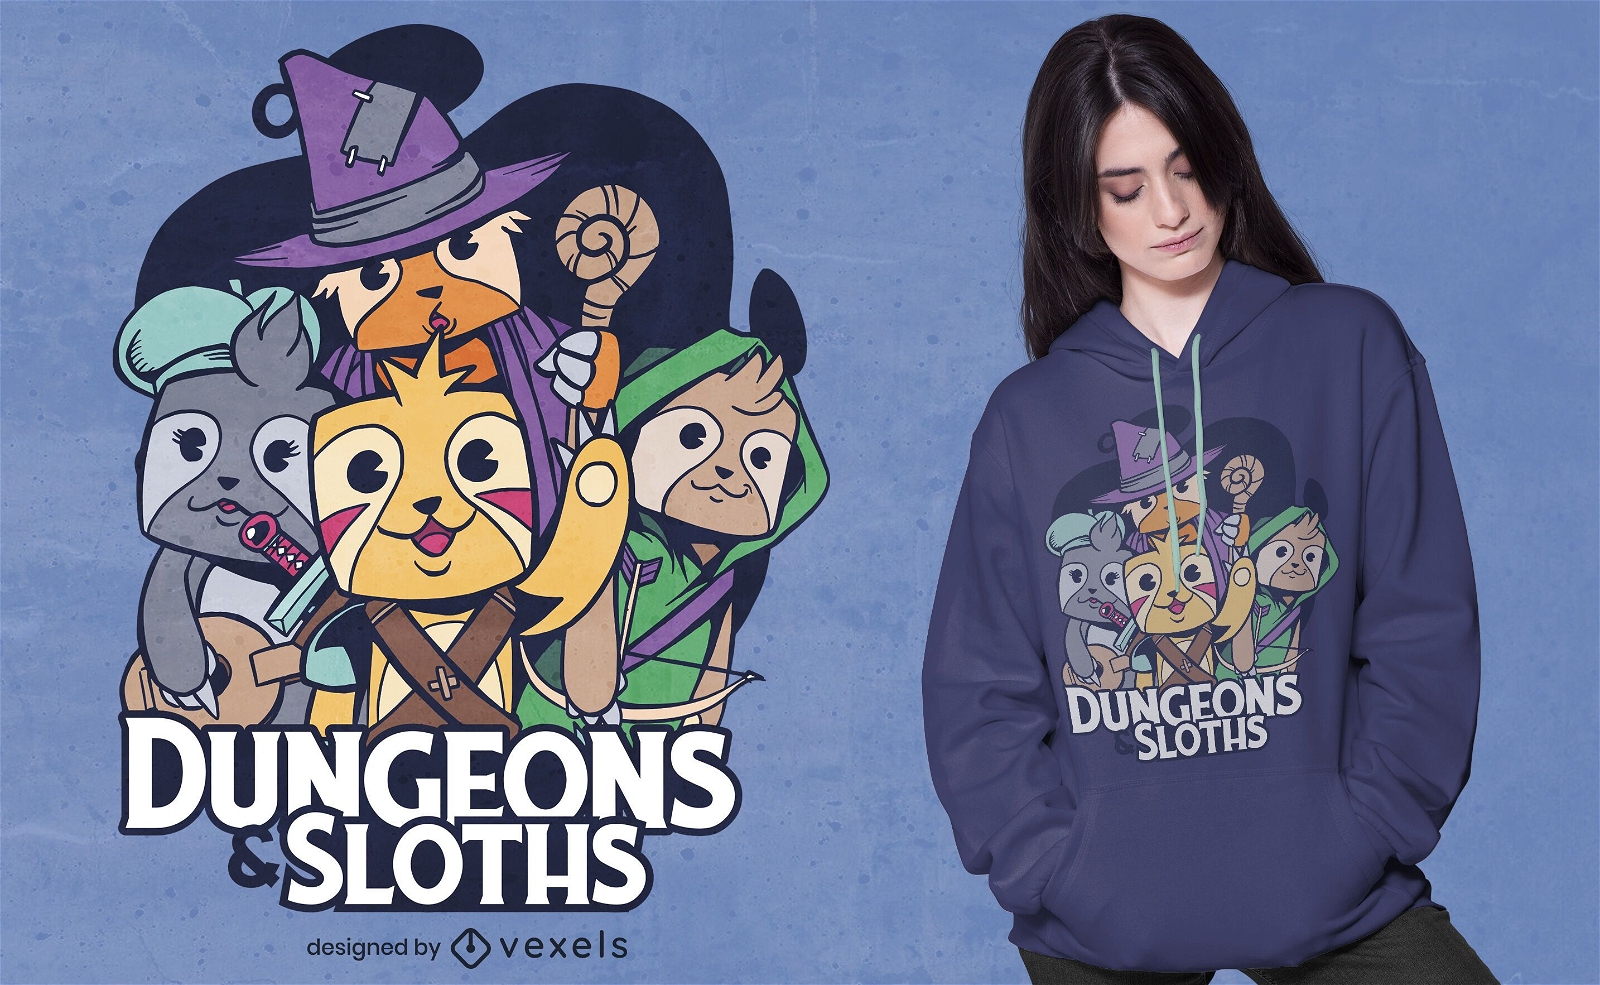 Dungeons & sloths t-shirt design